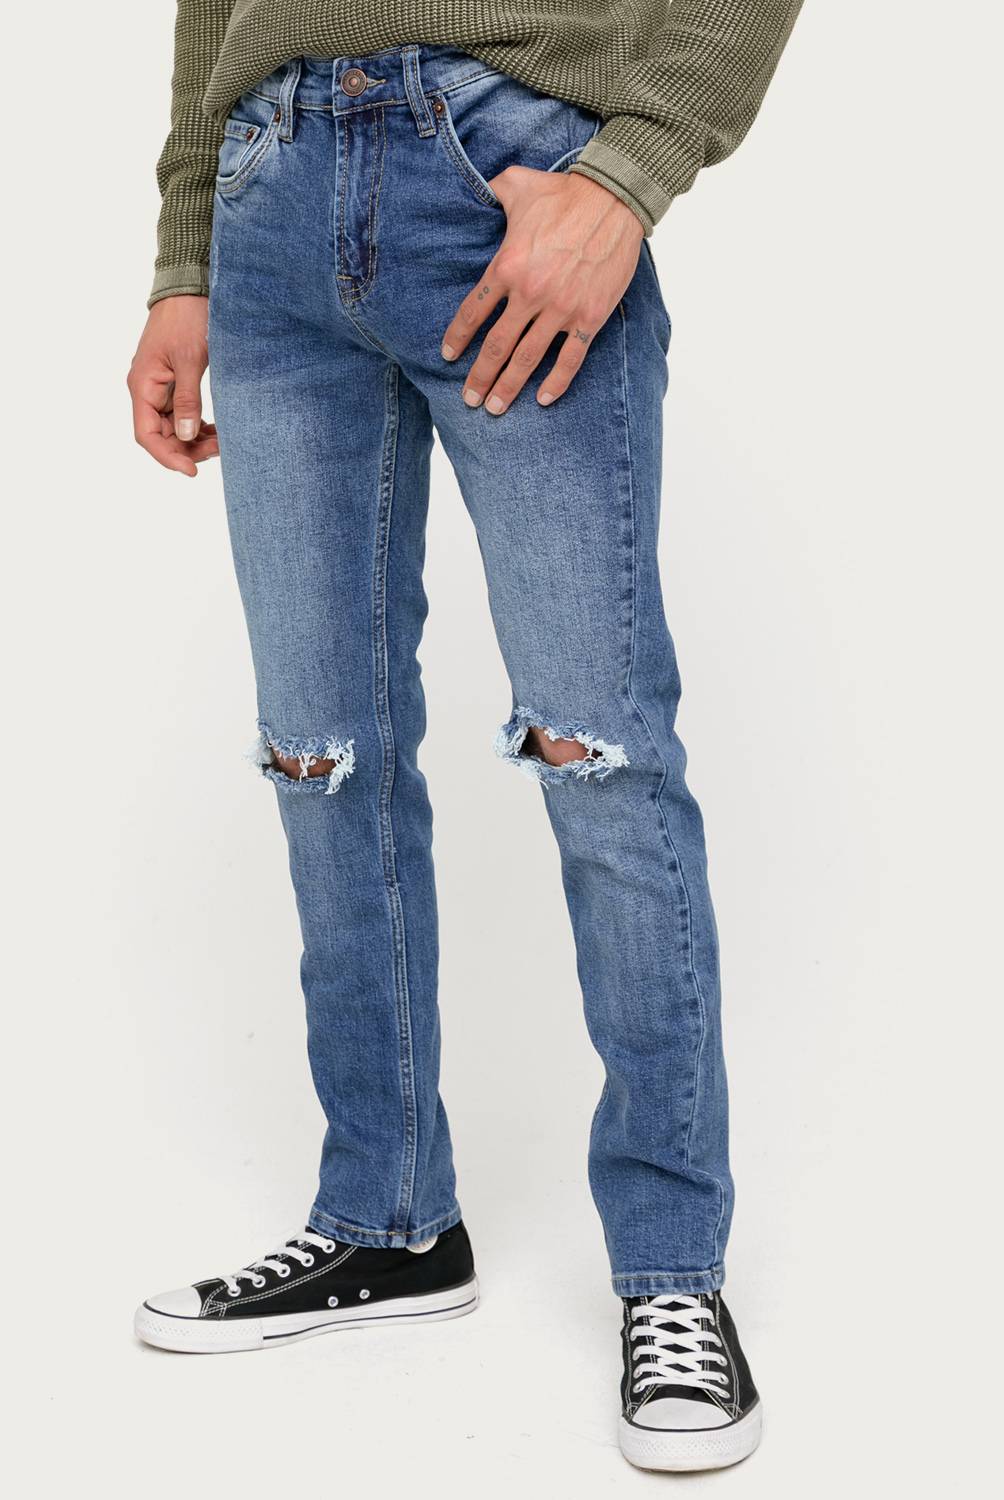 AMERICANINO - Jeans Skinny Hombre